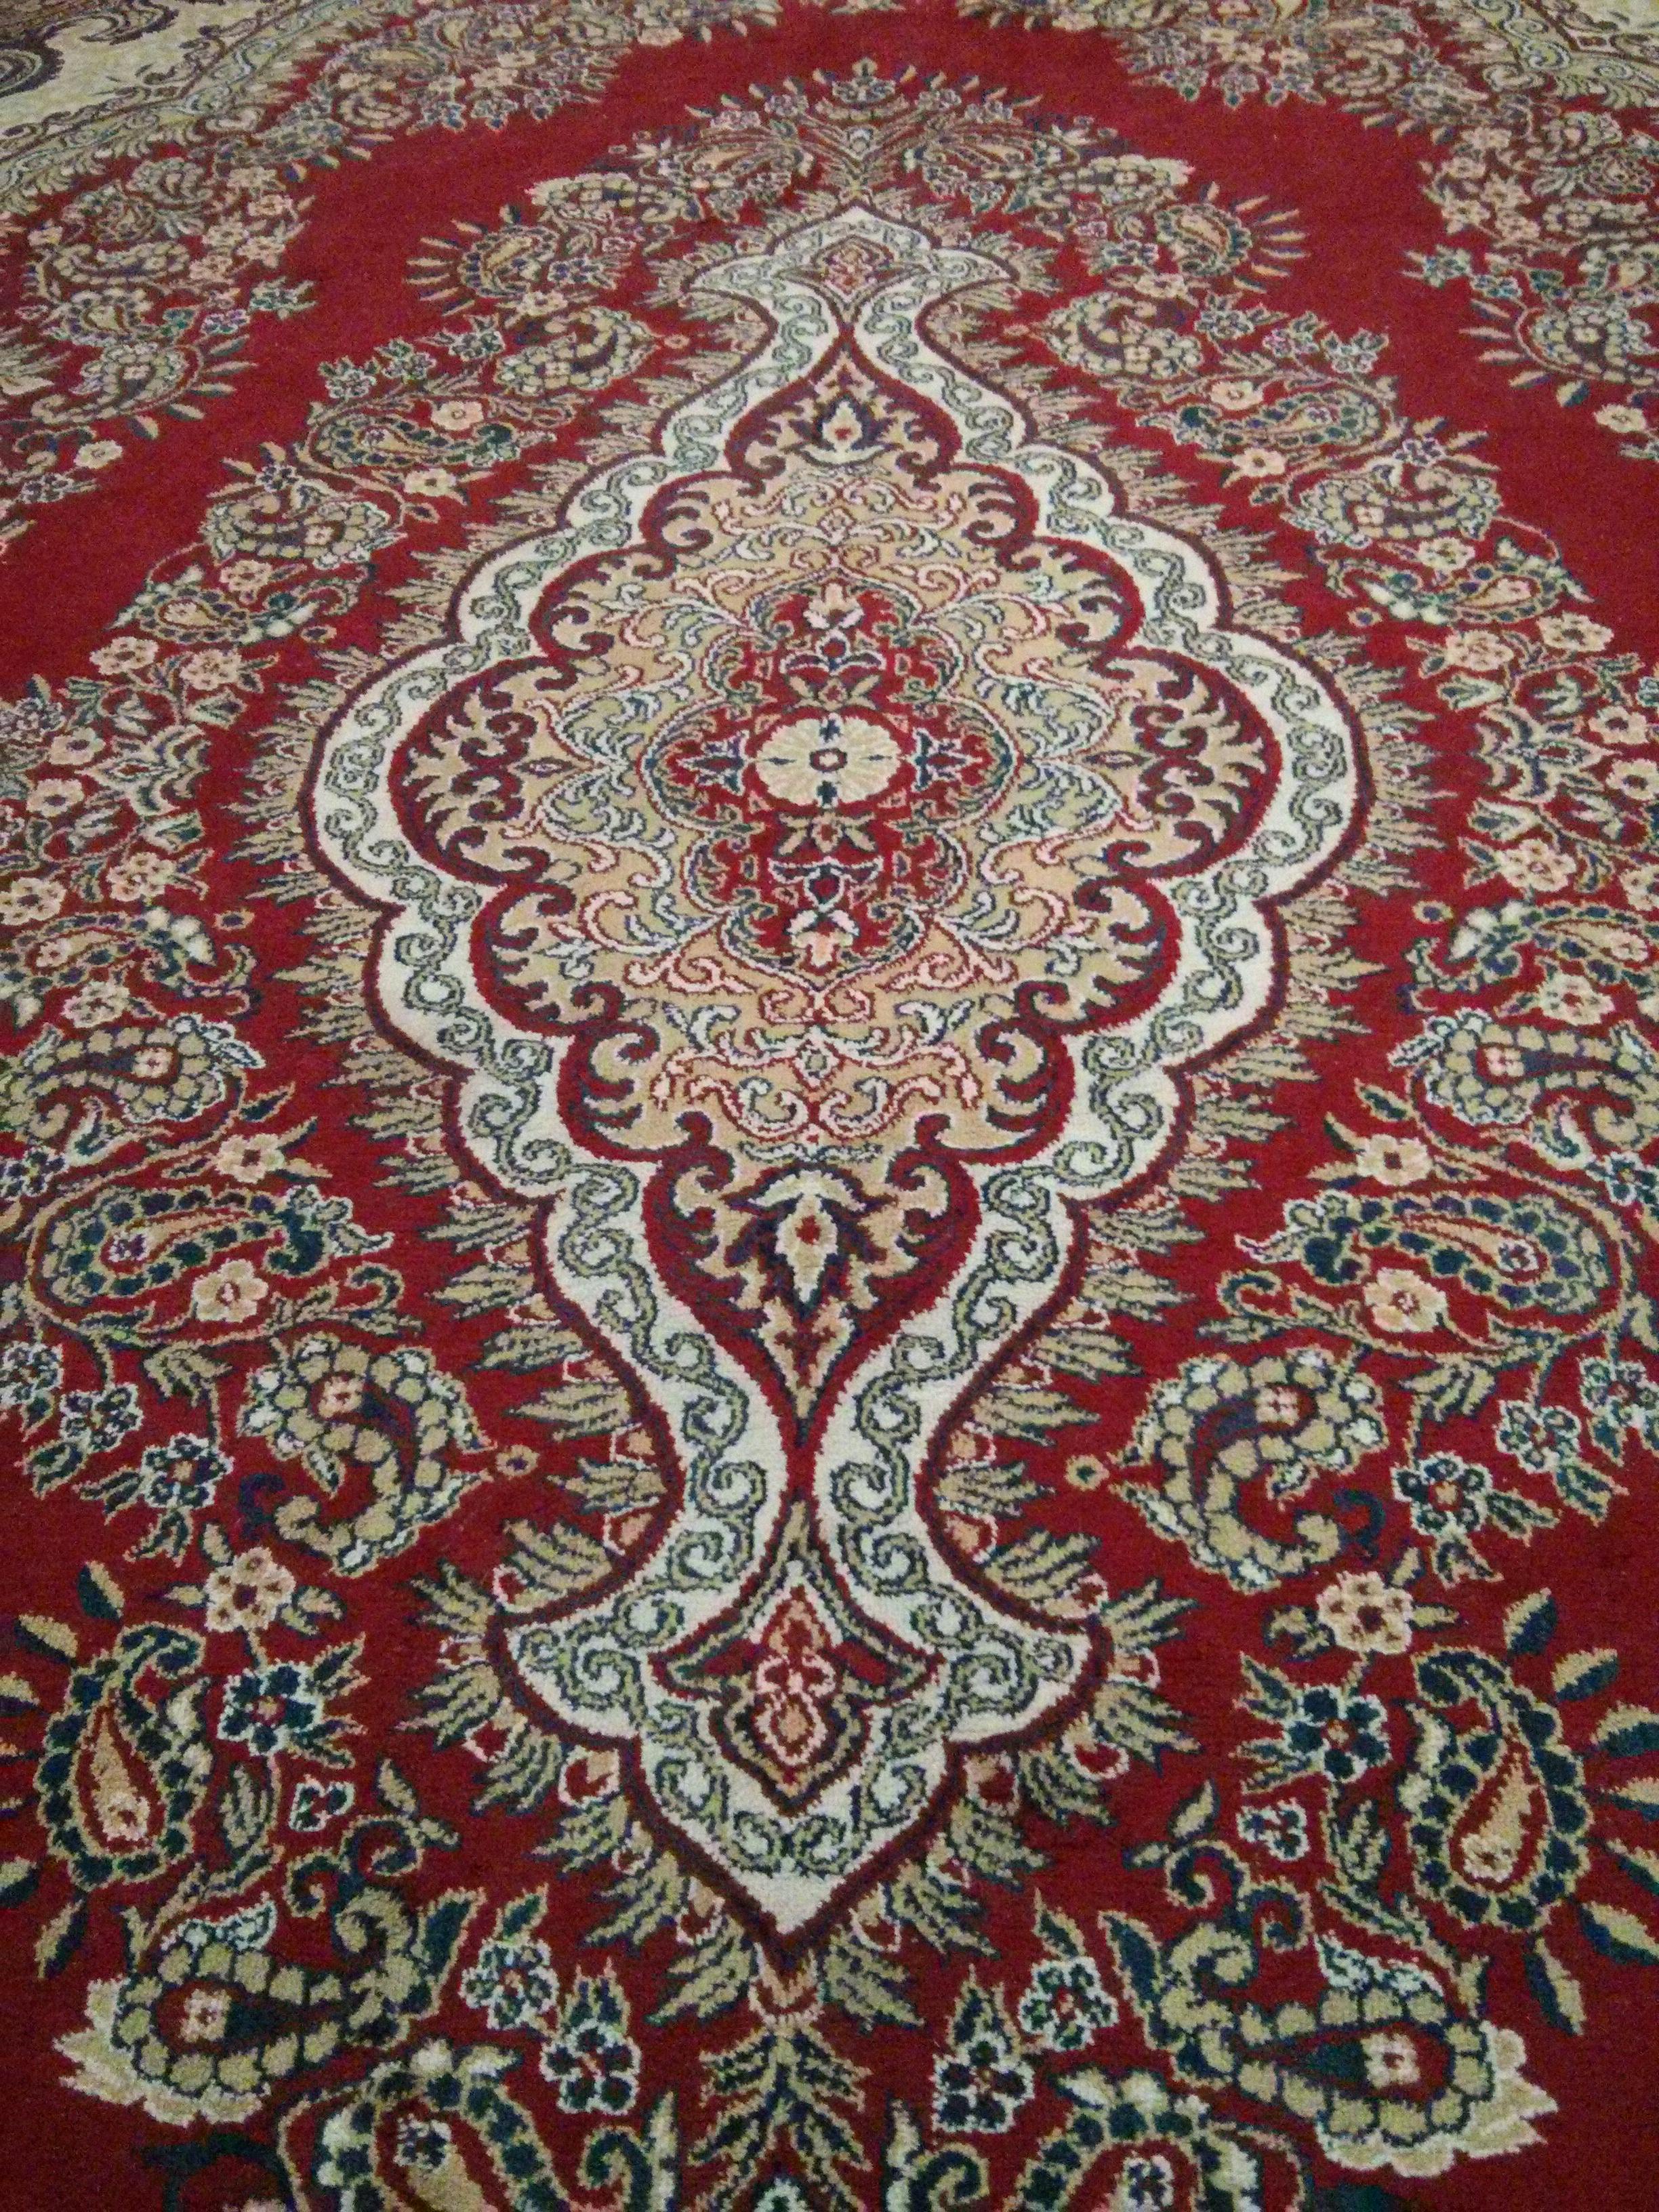 Free stock photo of carpet, red, red carpet